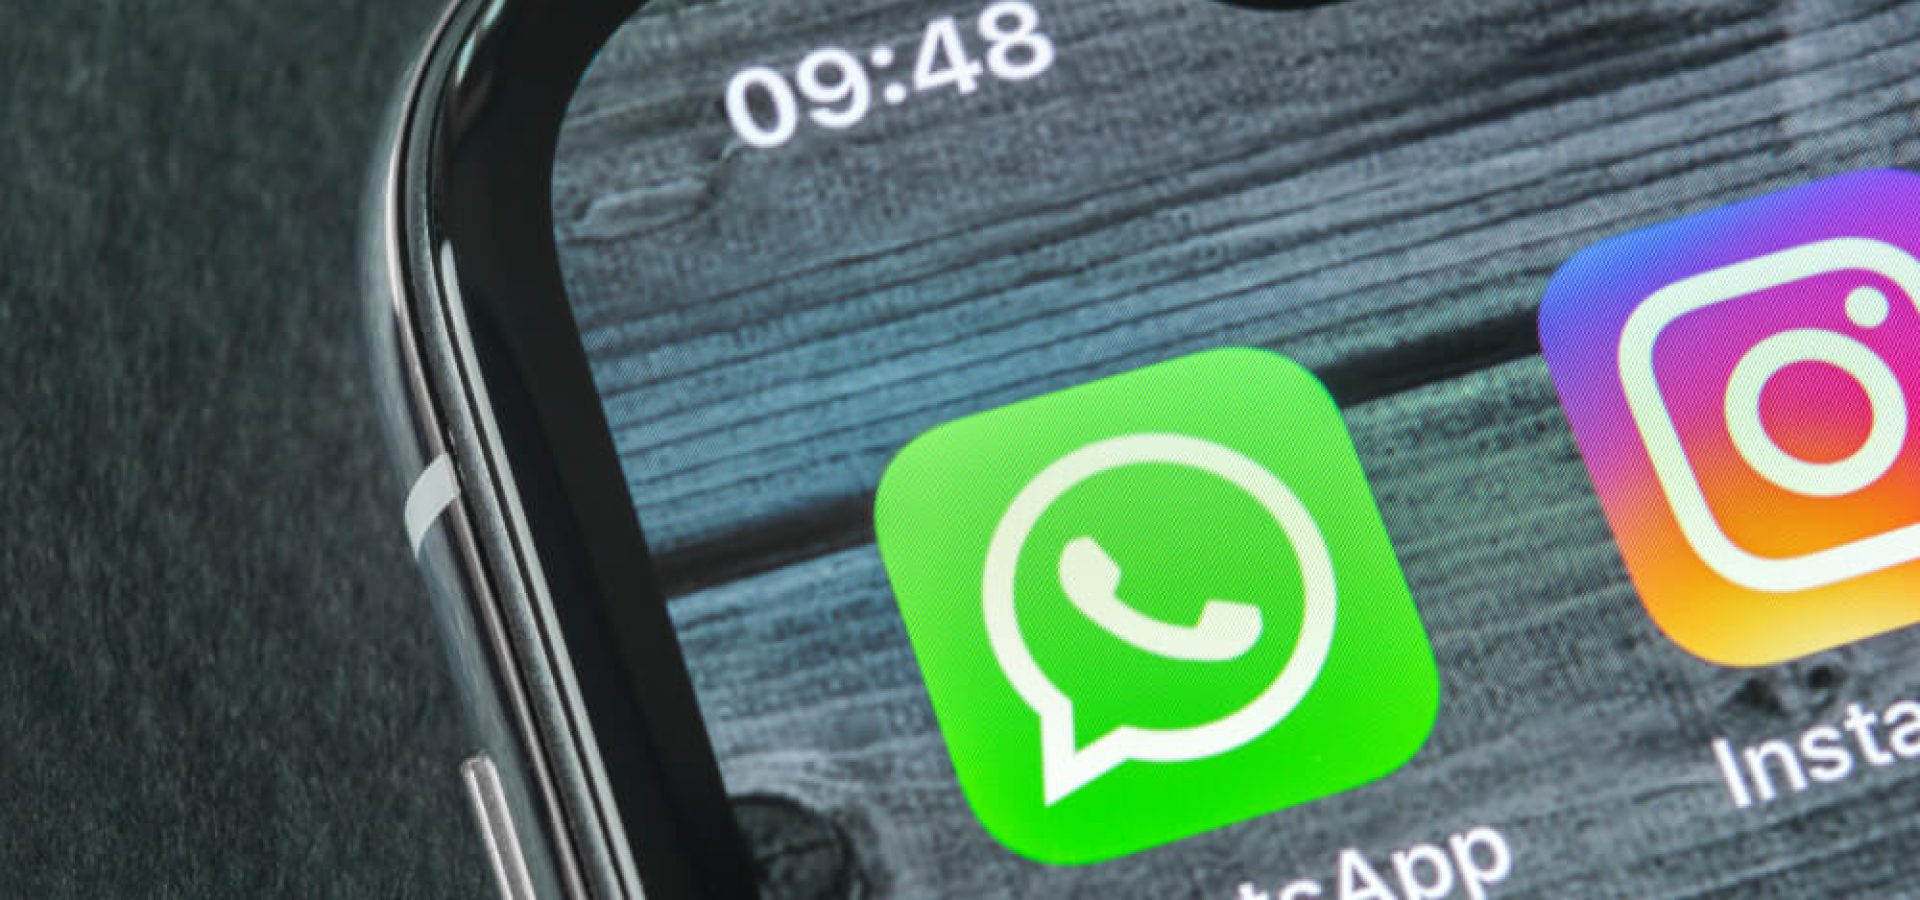 Whatsapp messenger application icon on smartphone.